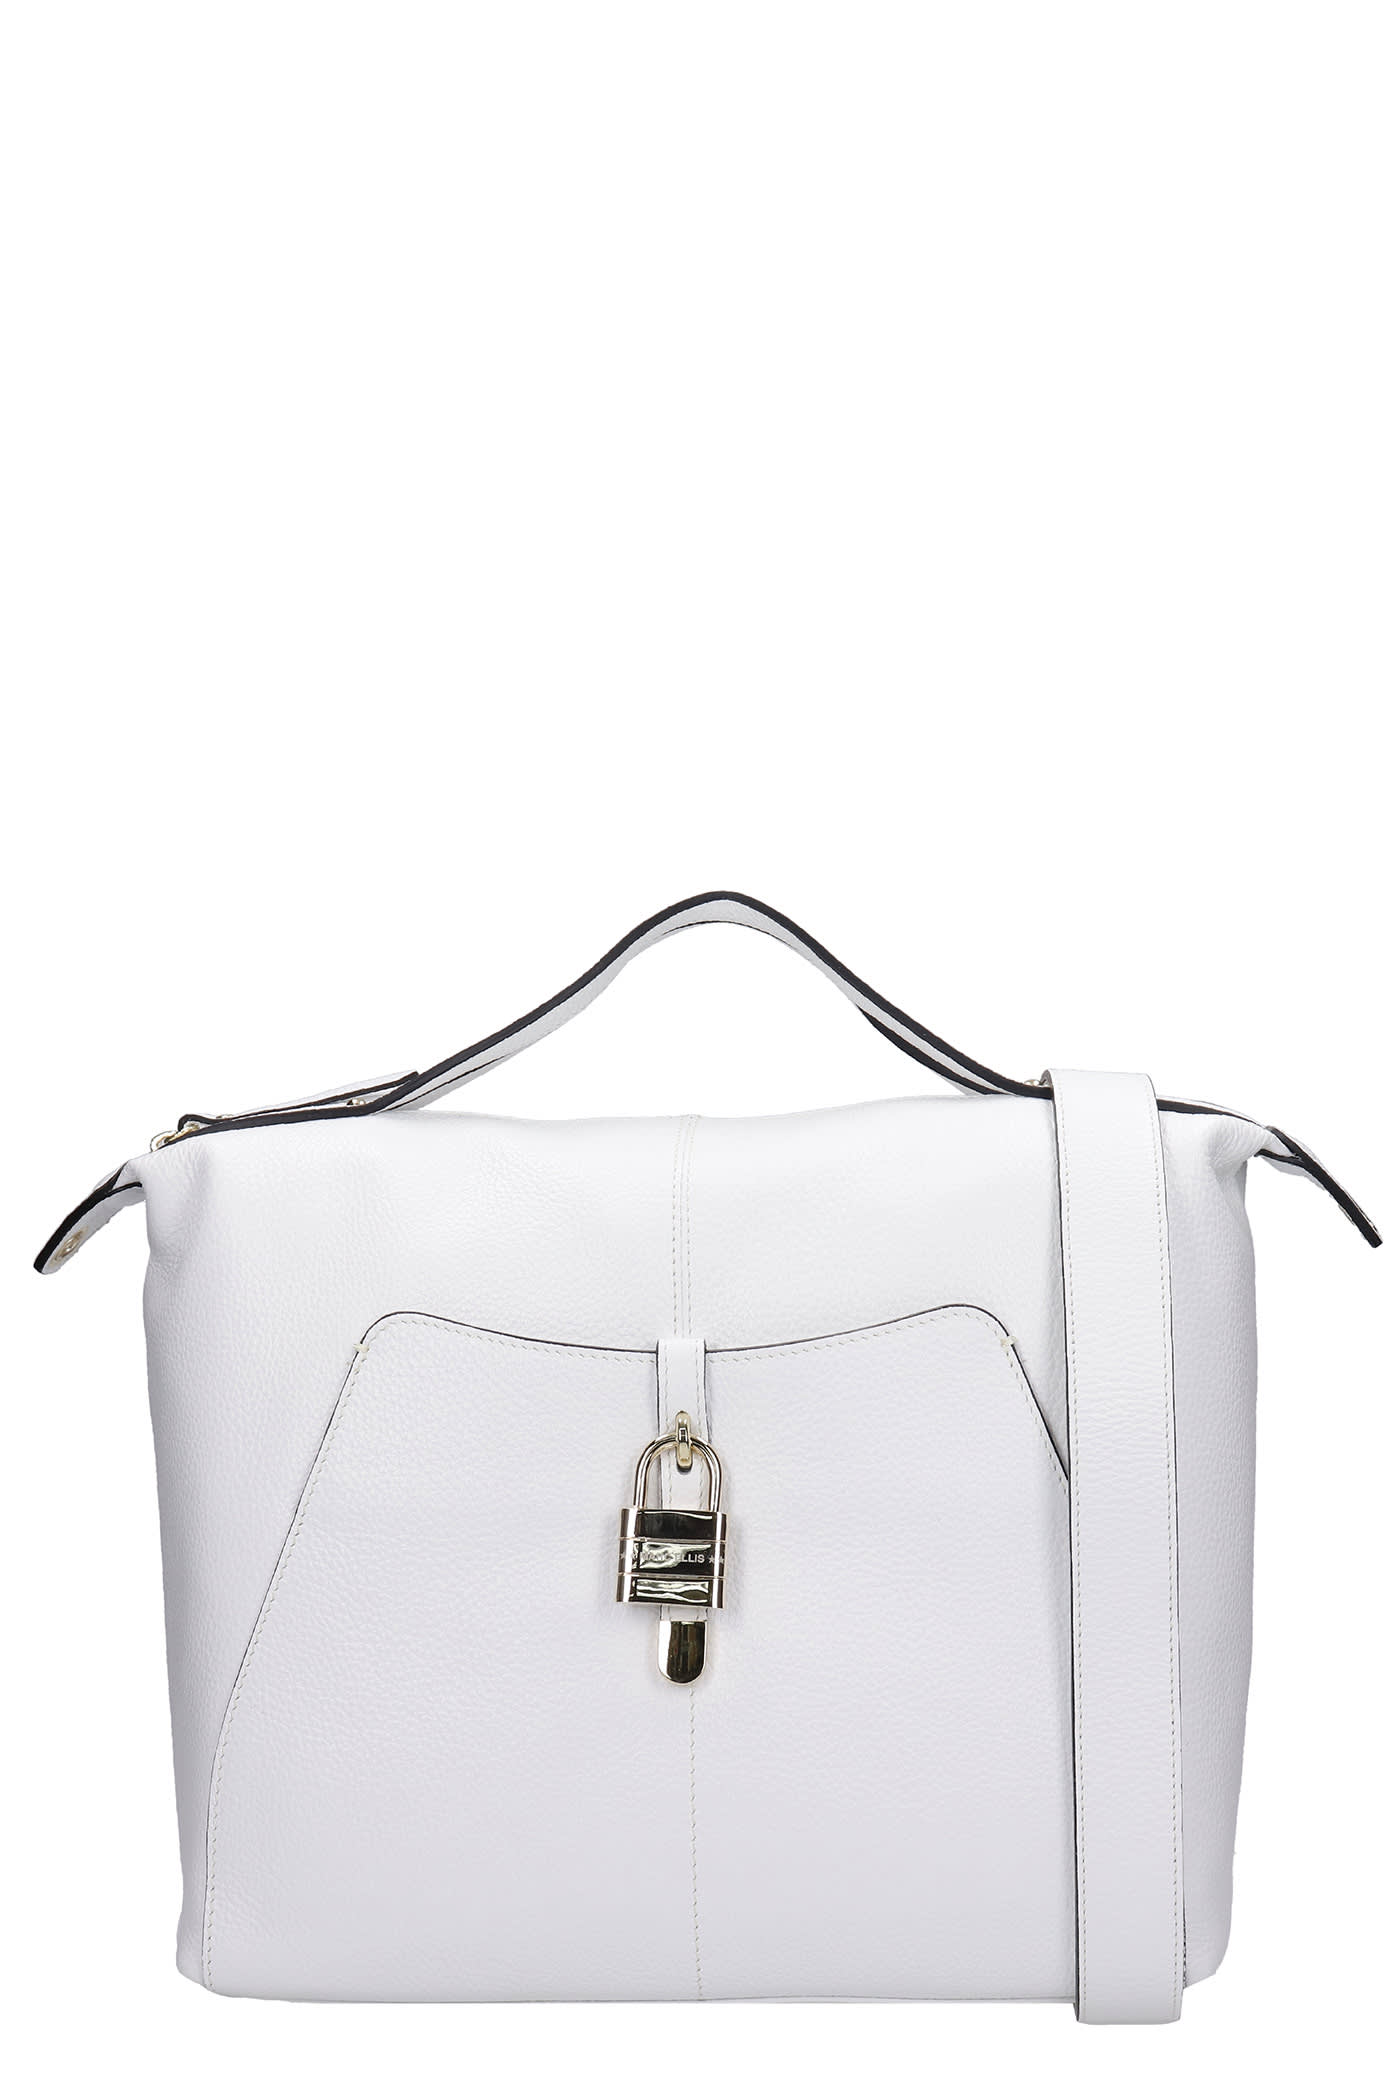 Marc Ellis Kally Hand Bag In White Leather